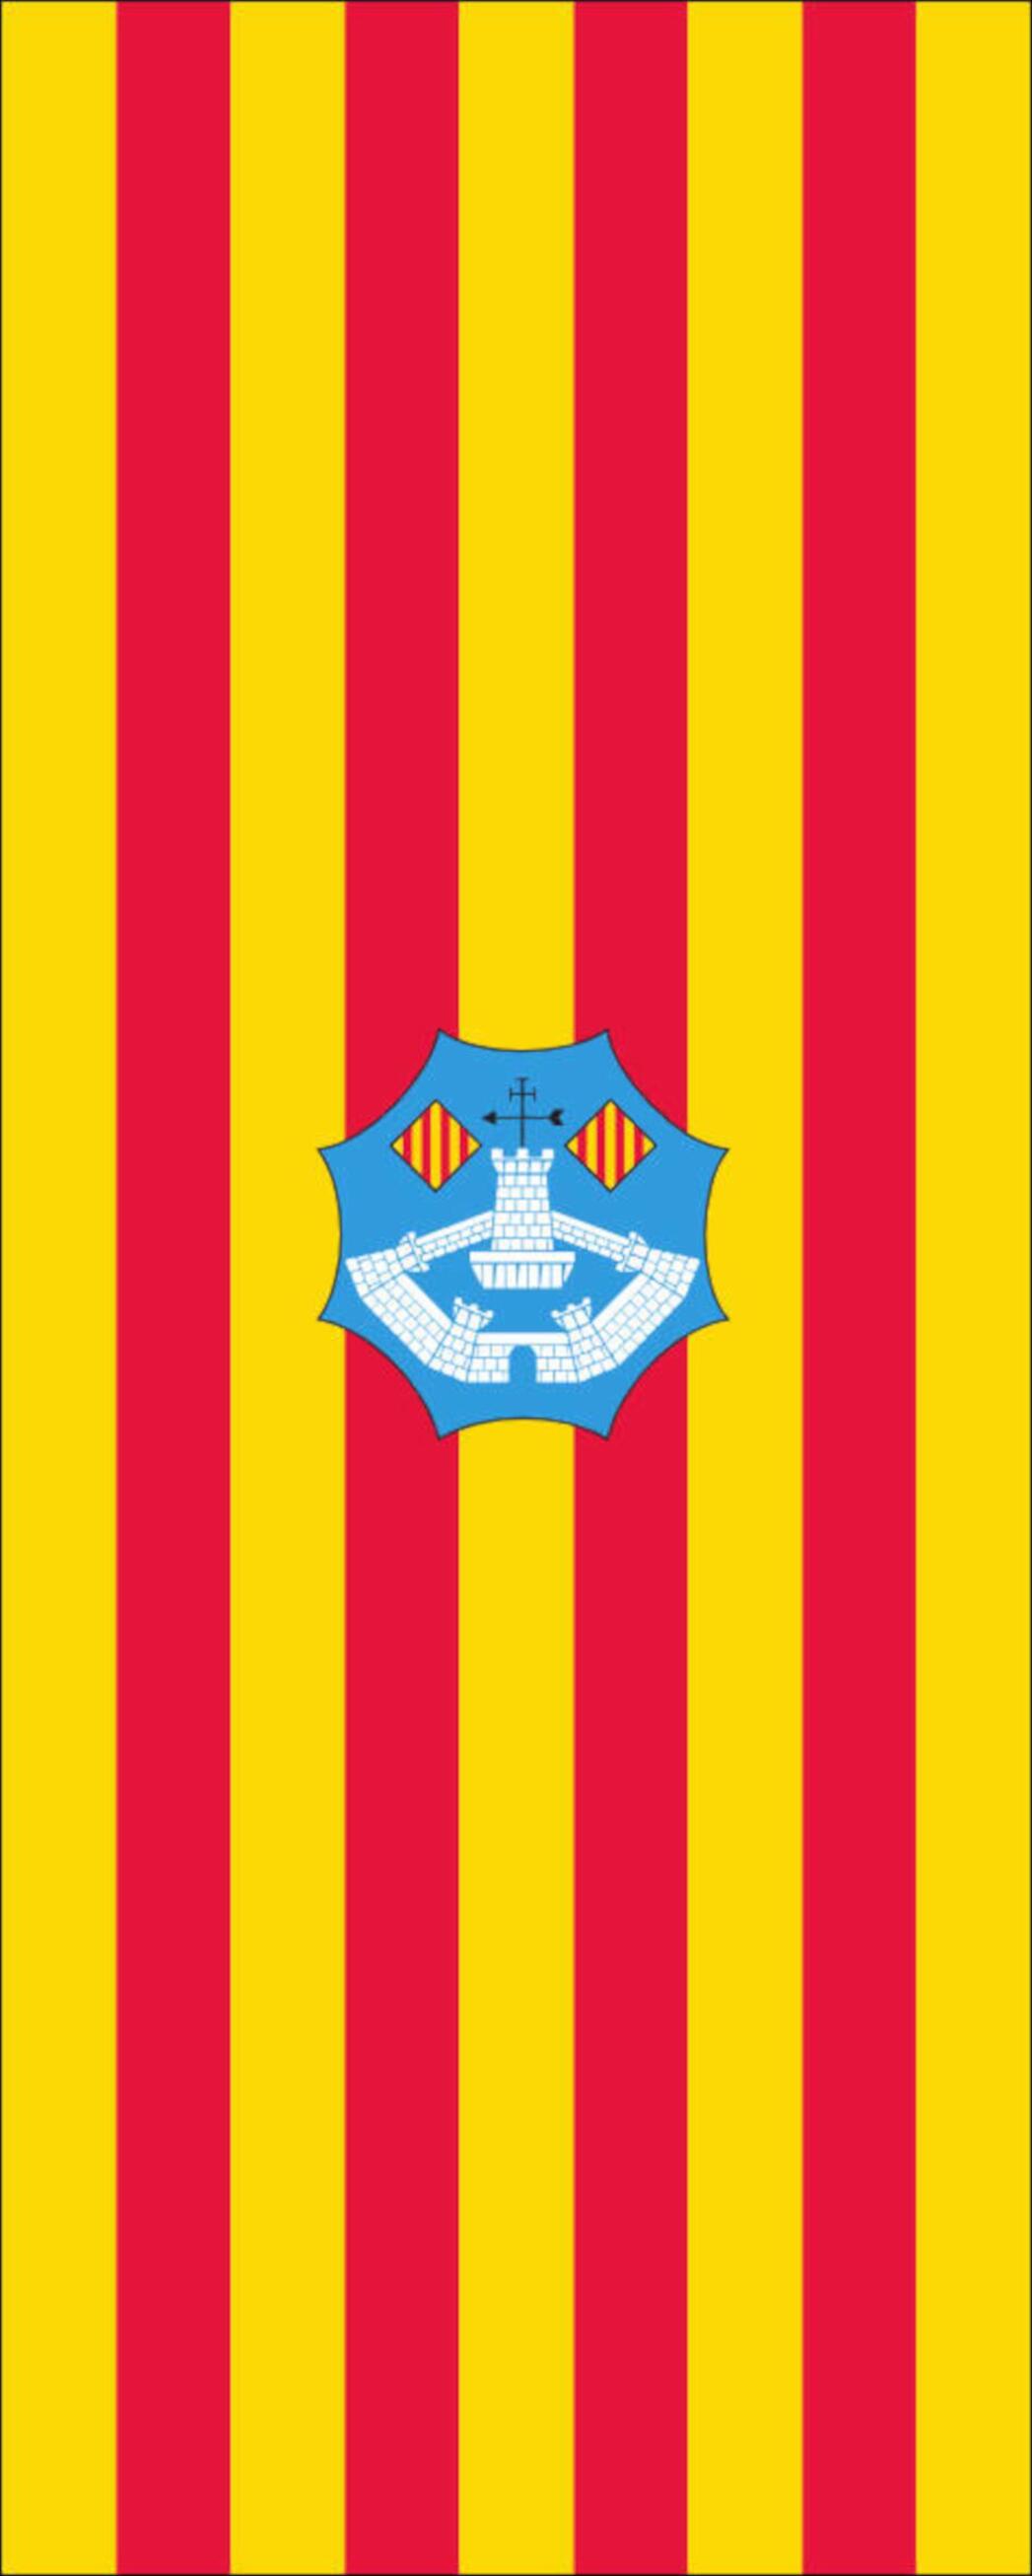 Flagge Menorca